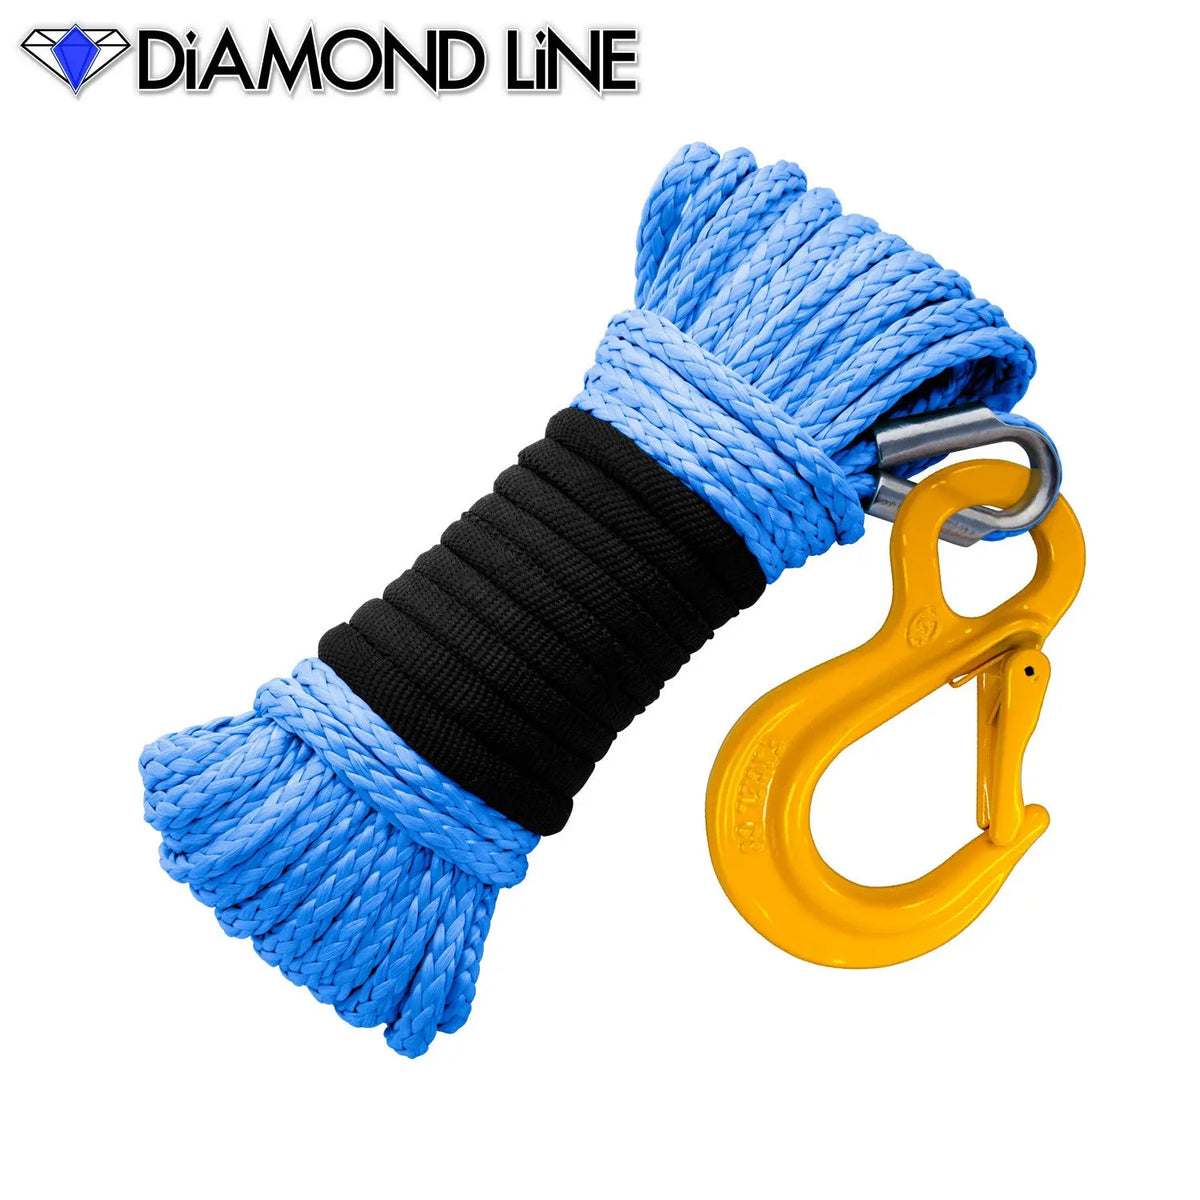 3/16 x 50' Main Line Winch Rope - Diamond Line - Custom Splice